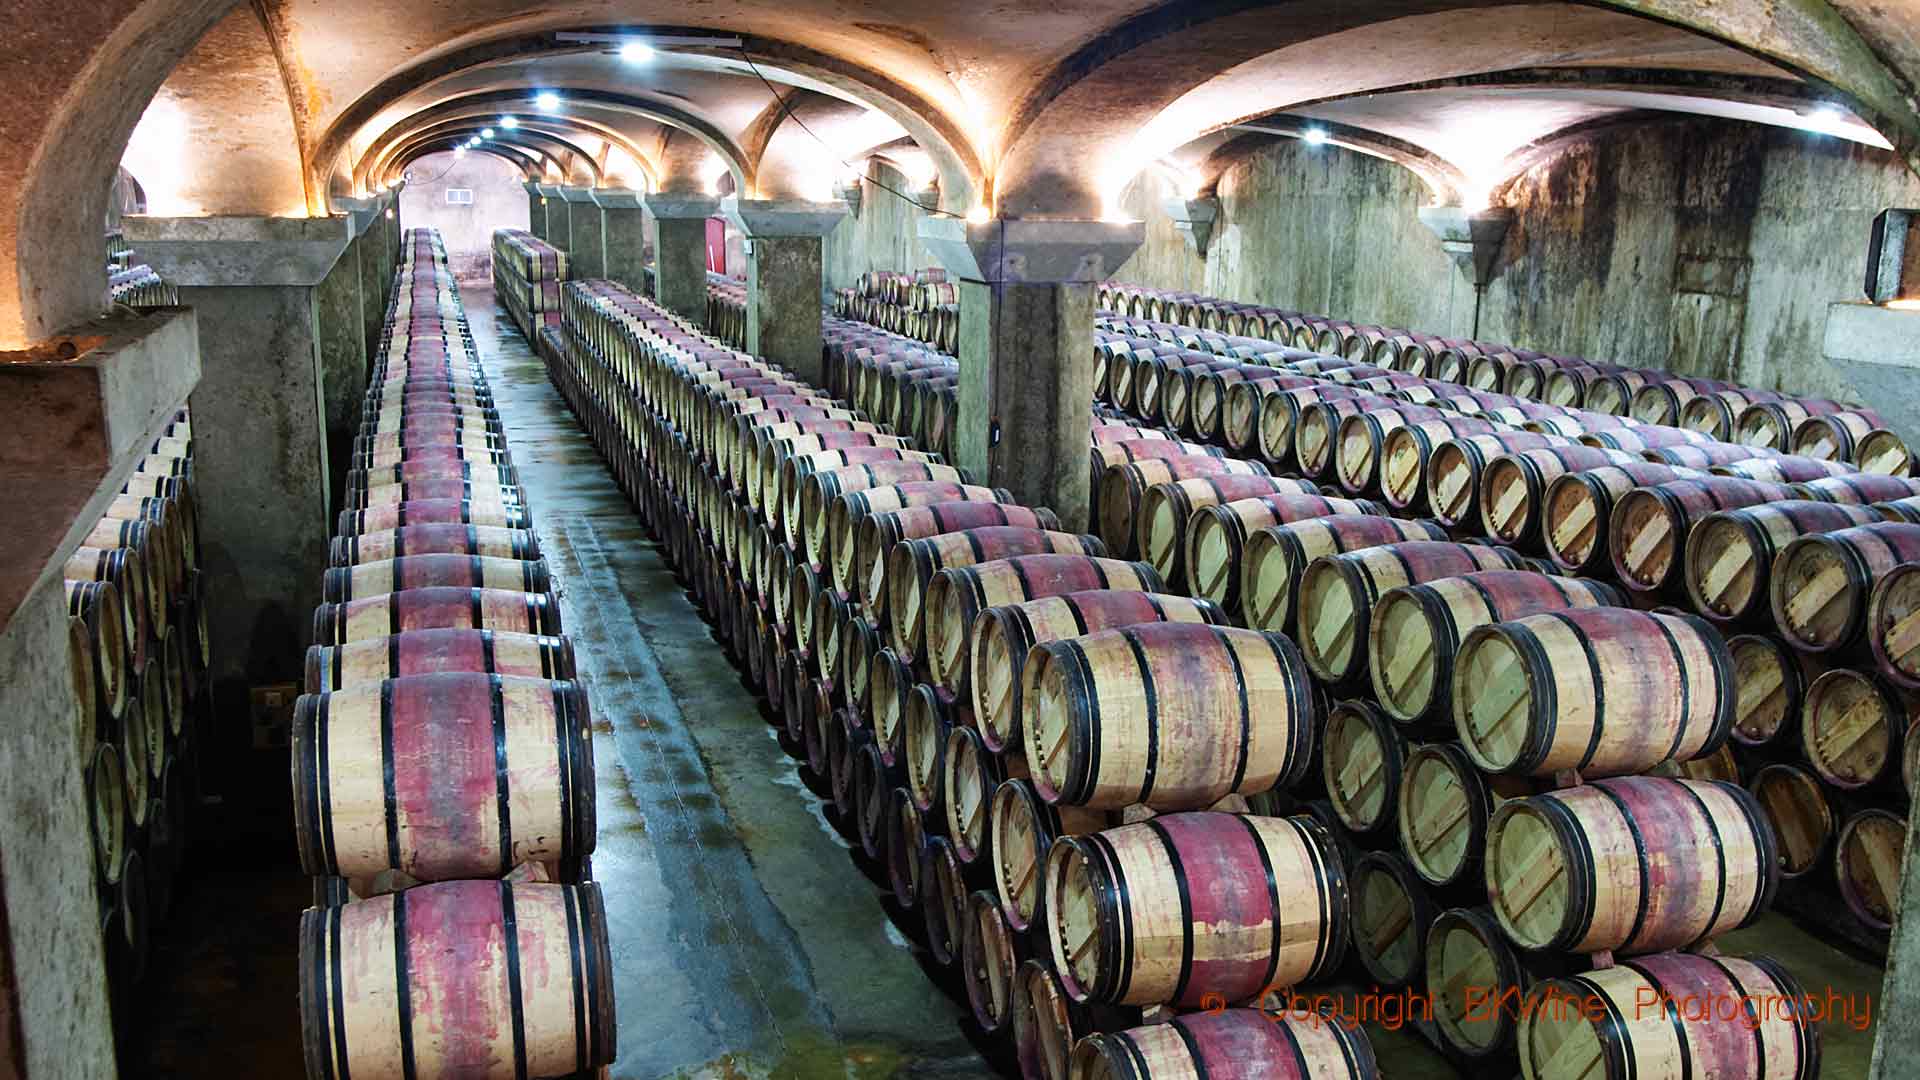 A barrel cellar in a chateau in Bordeaux